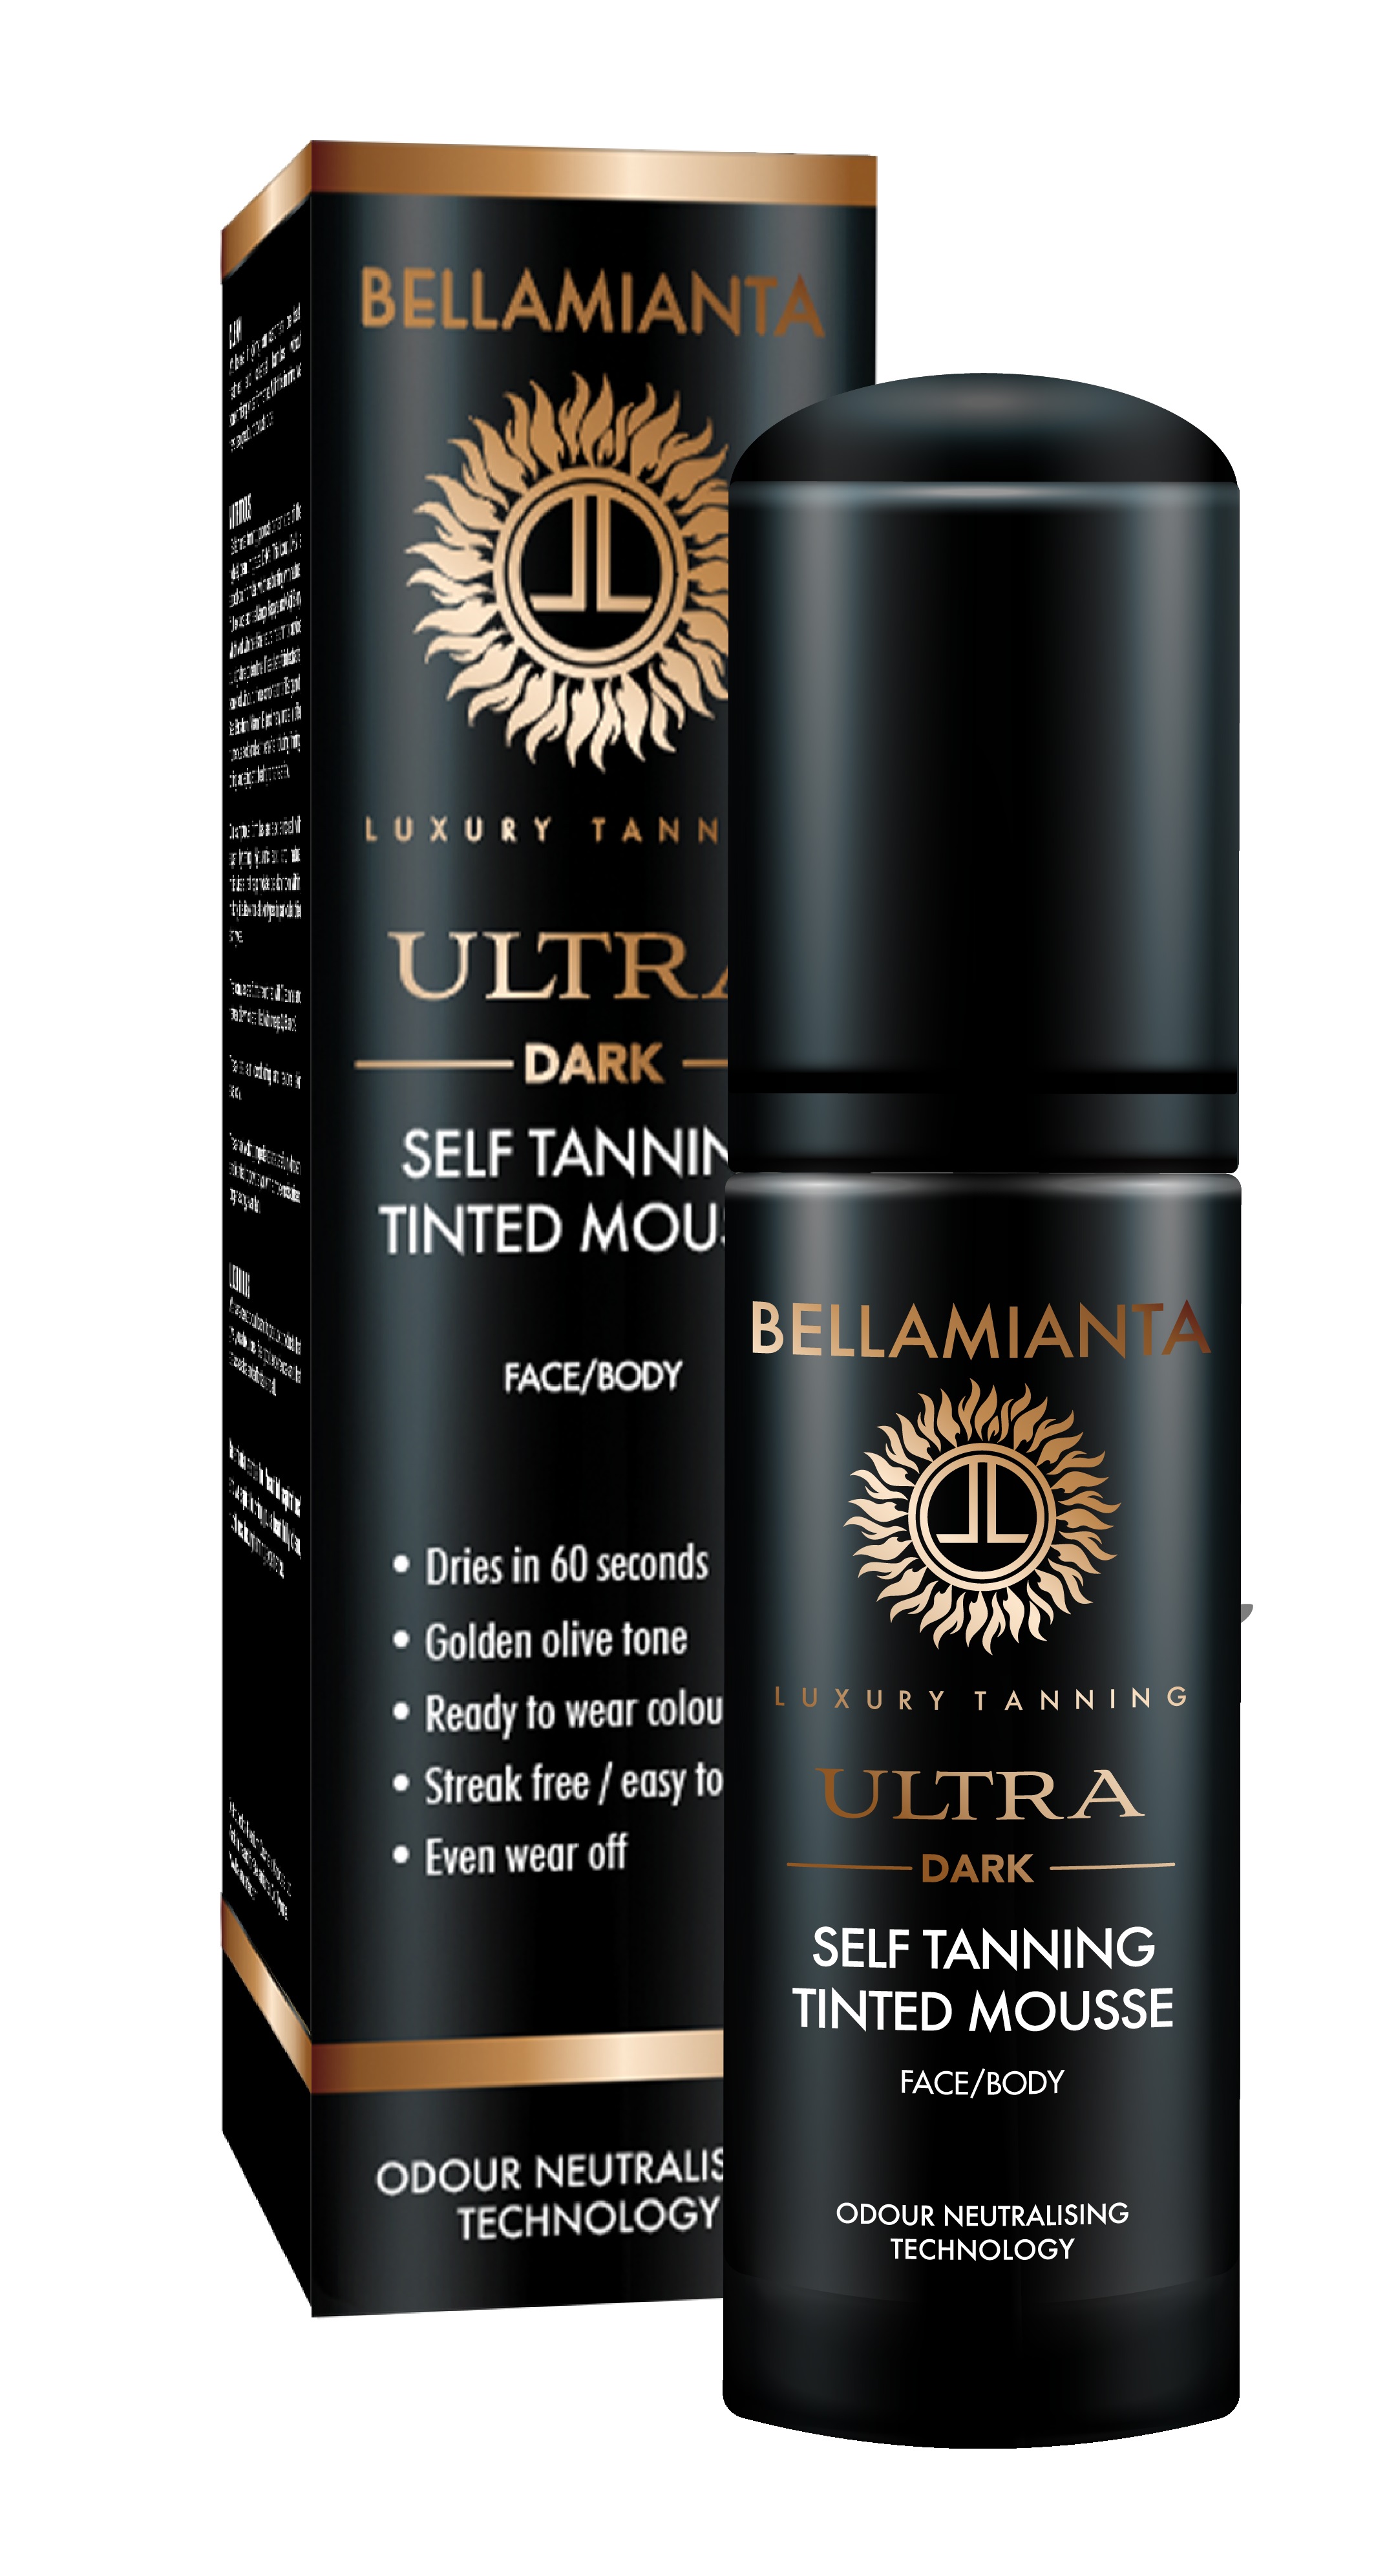 Bellamianta Ultra Dark Self Tanning Tinted Mousse 